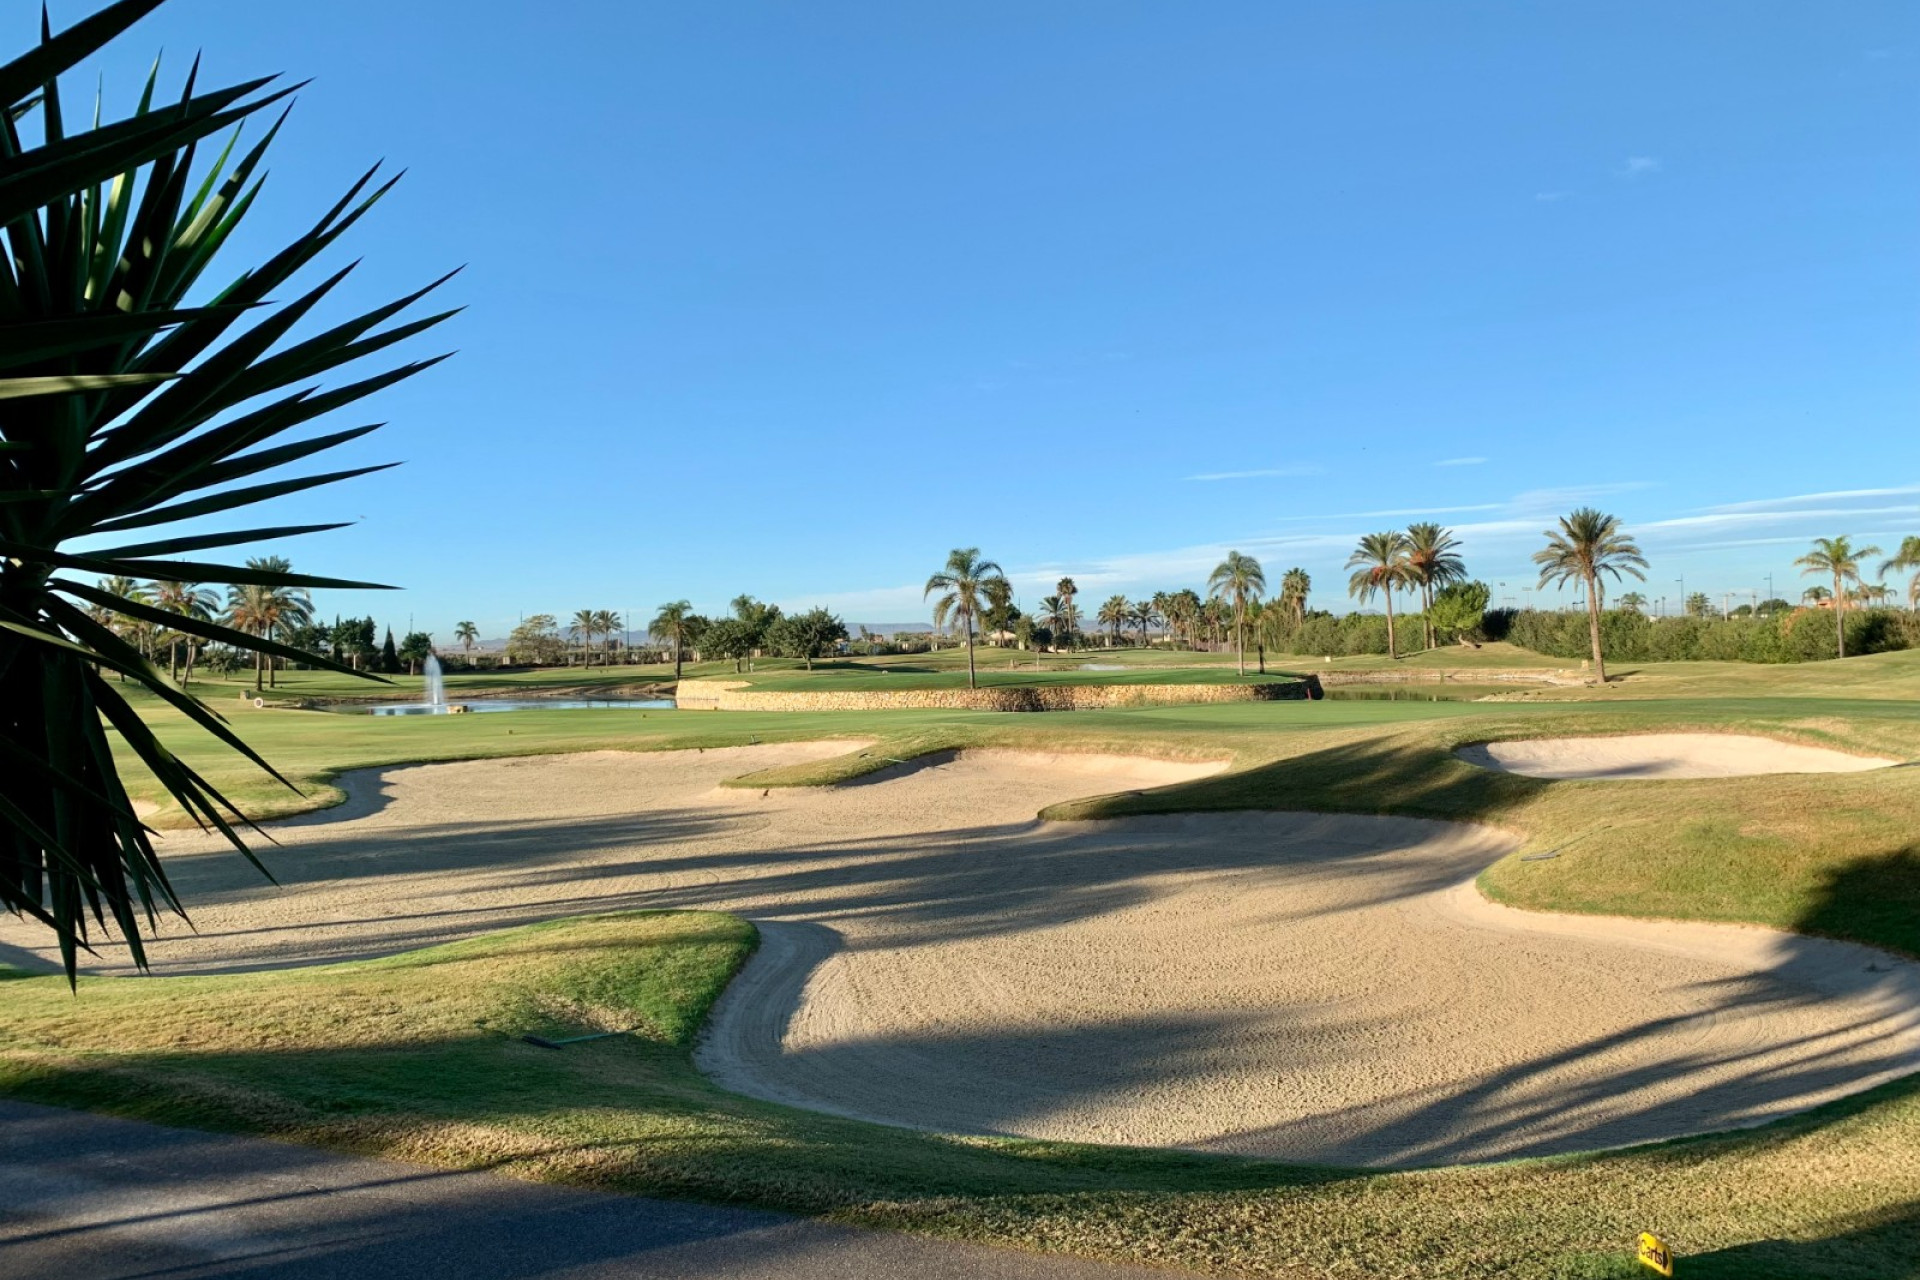 Obra nueva - Villa en primera línea de golf - Roda Golf & Beach Resort, San Javier - Costa Calida